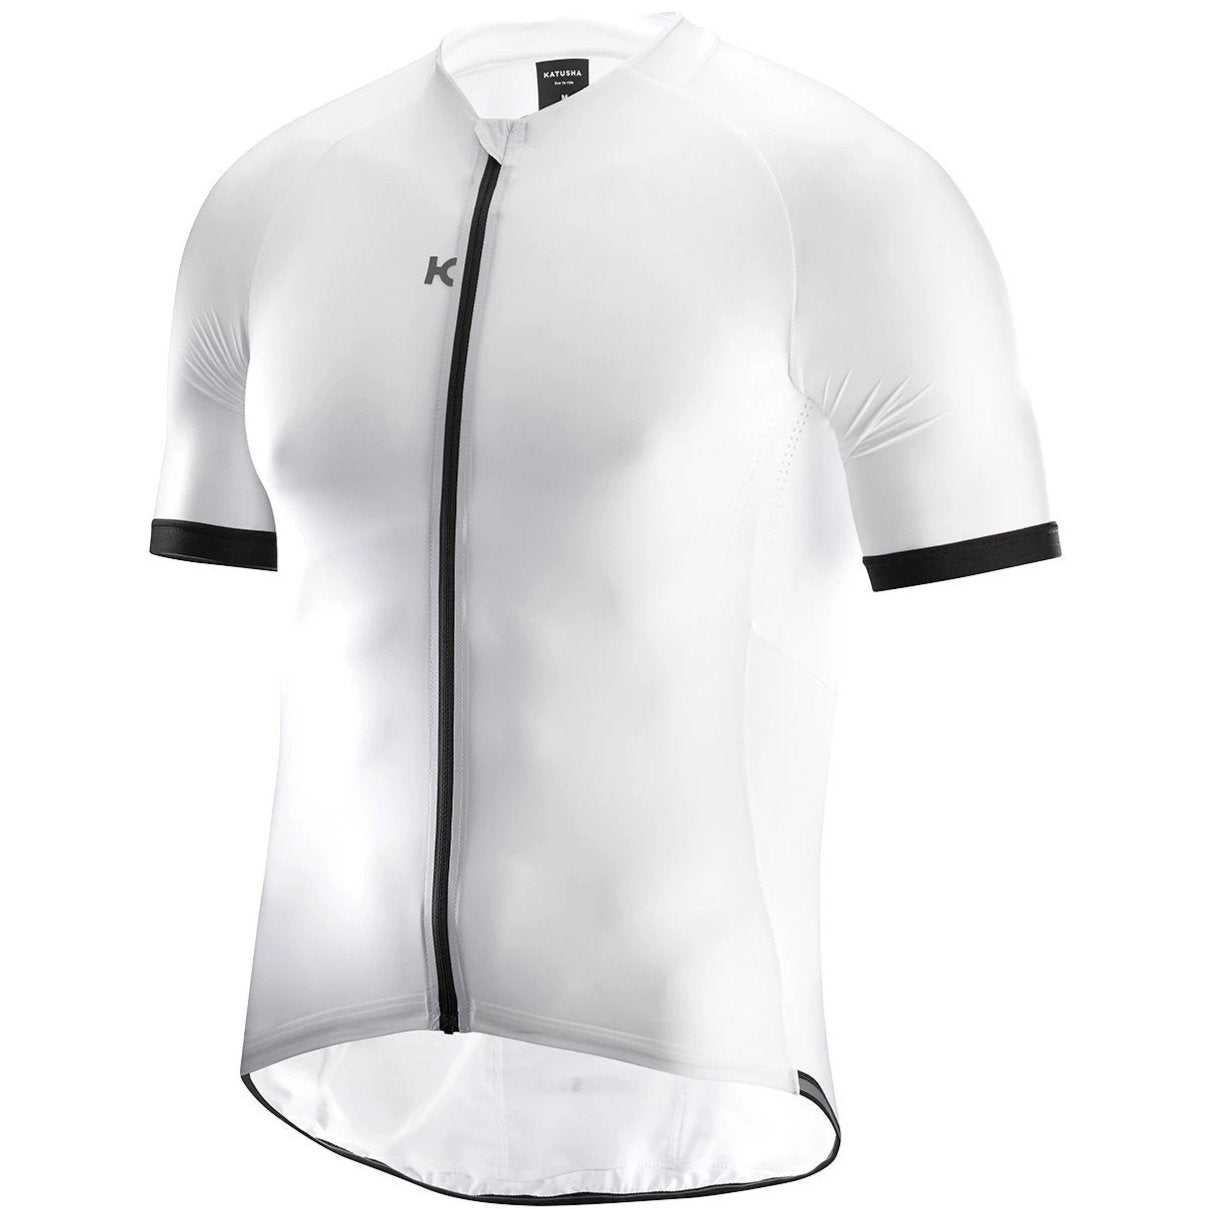 black white cycling jersey